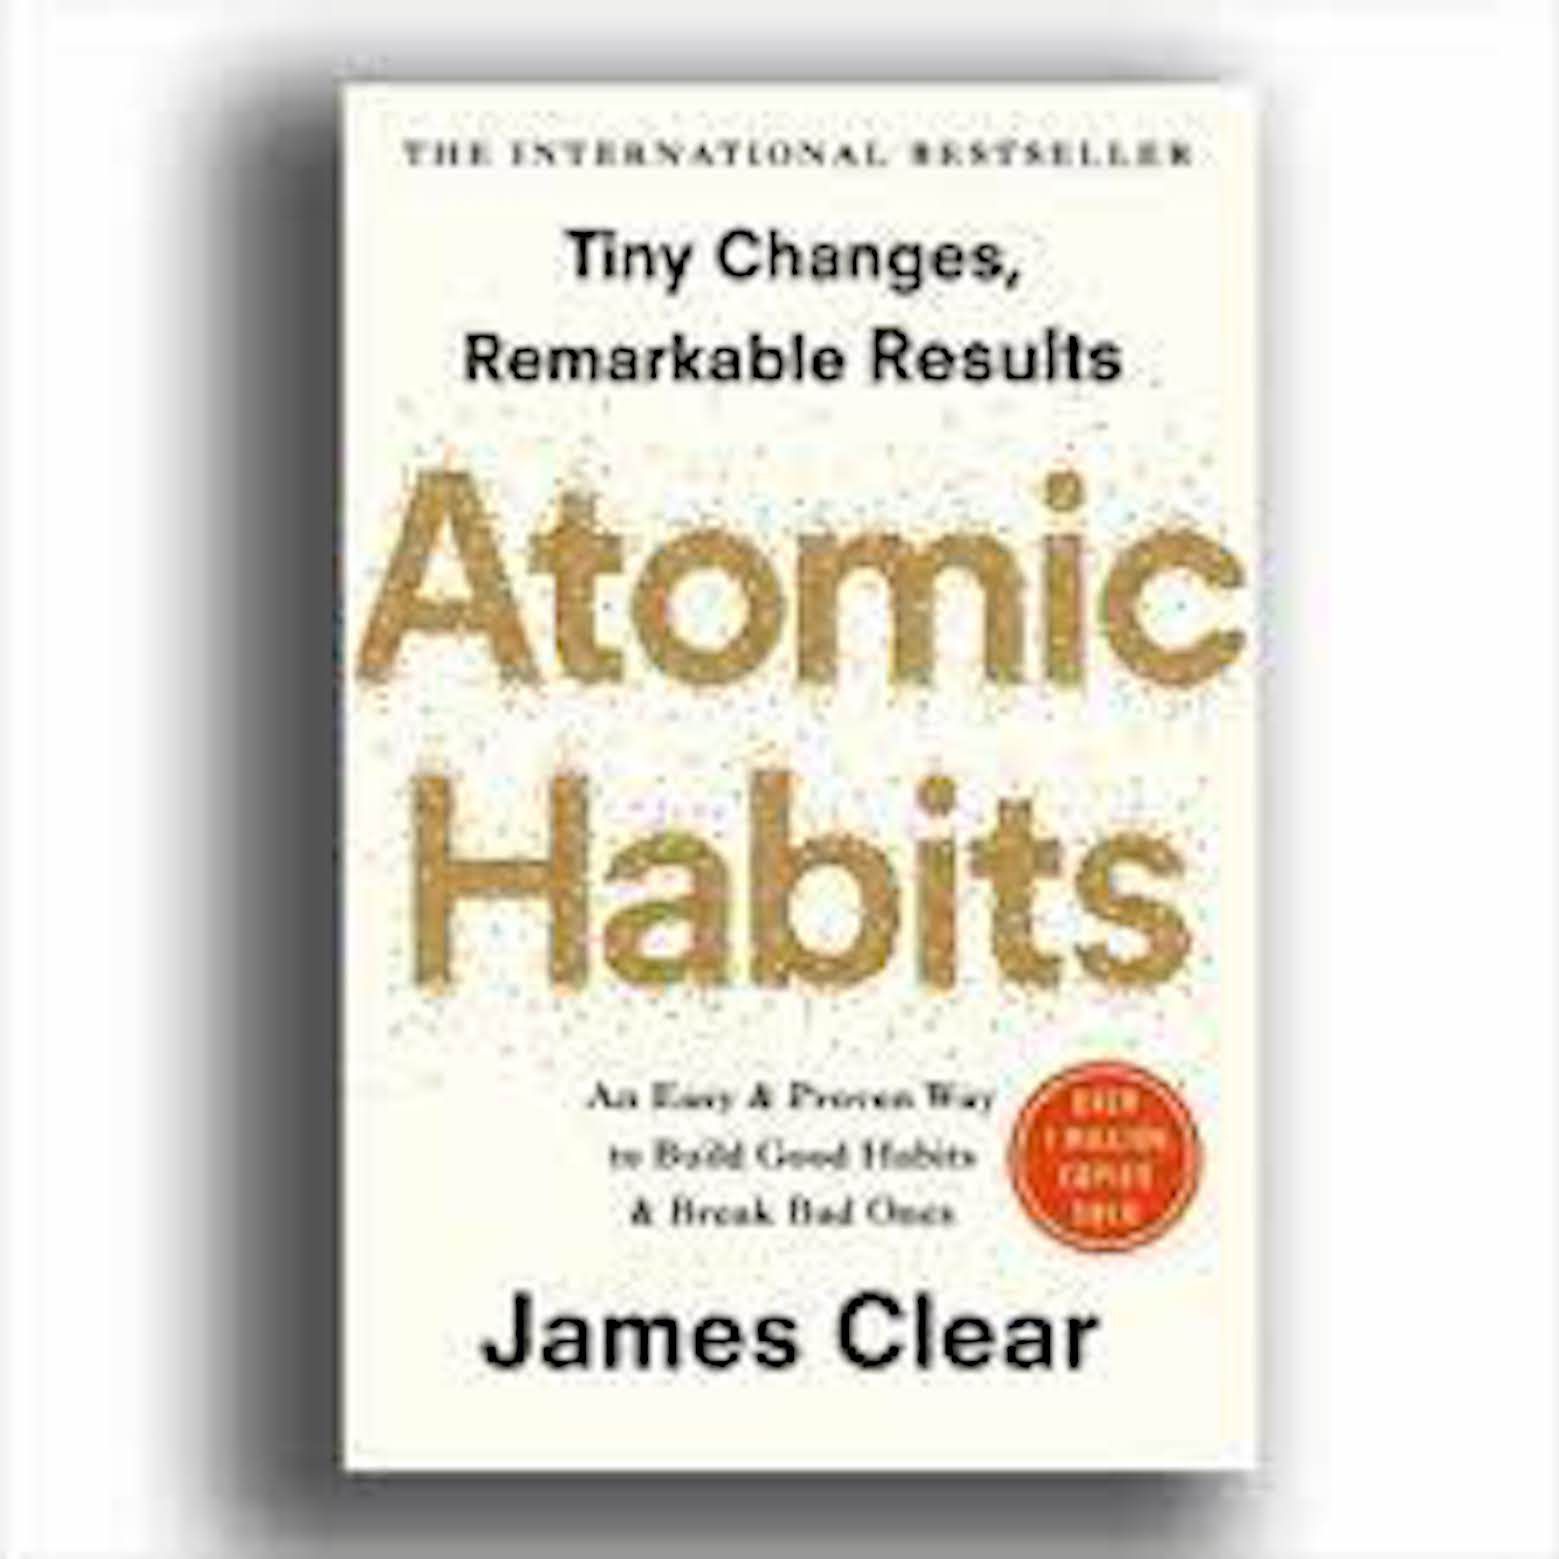     			Atomic Habits: the life-changing-paperback